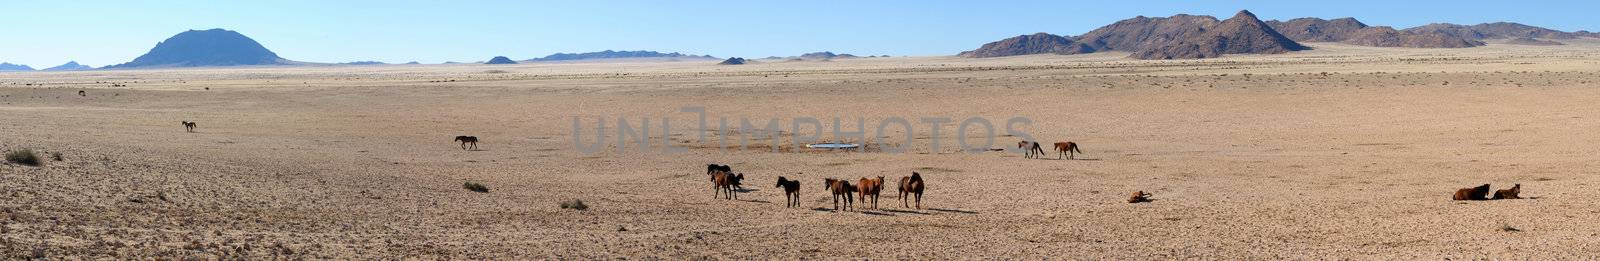 Wild horses of the namib panorama by dpreezg